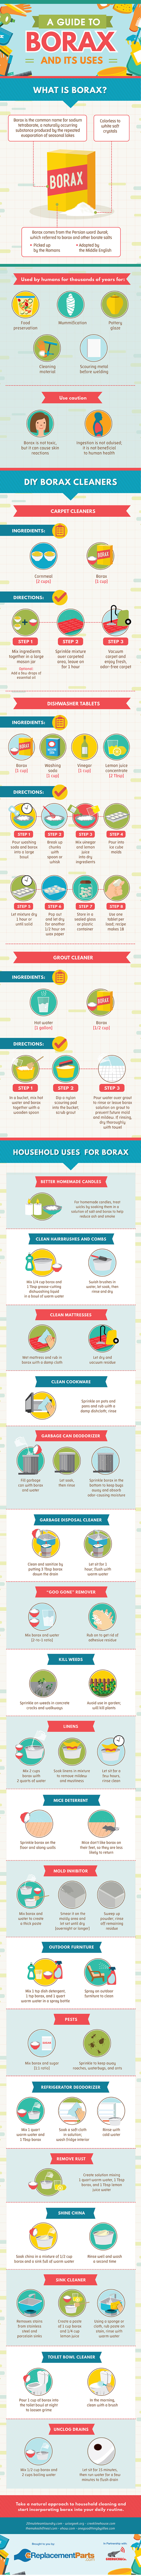 22 Uses for Borax Around the House (infographic) | PreparednessMama